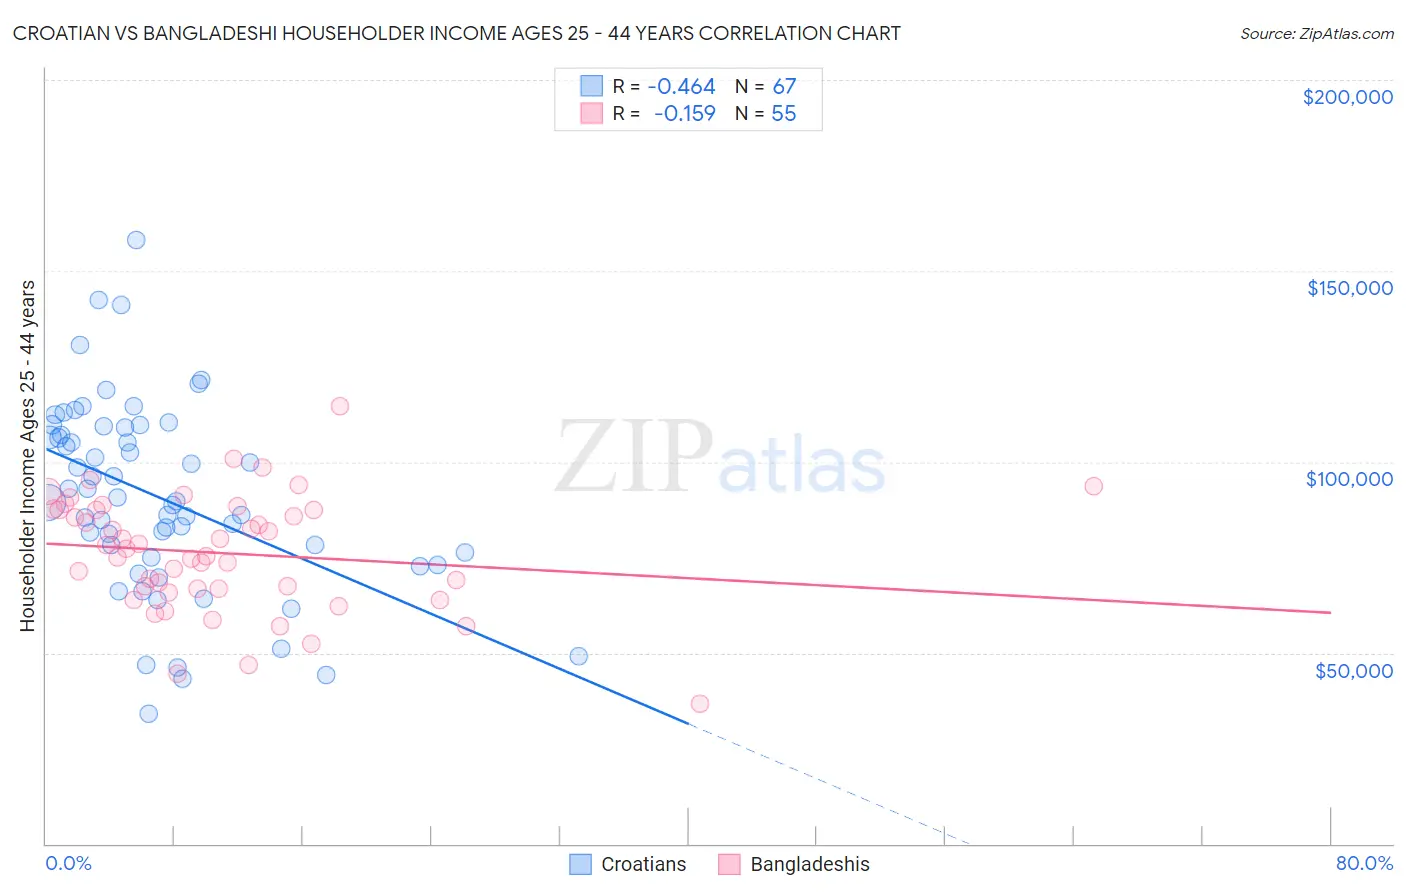 Croatian vs Bangladeshi Householder Income Ages 25 - 44 years